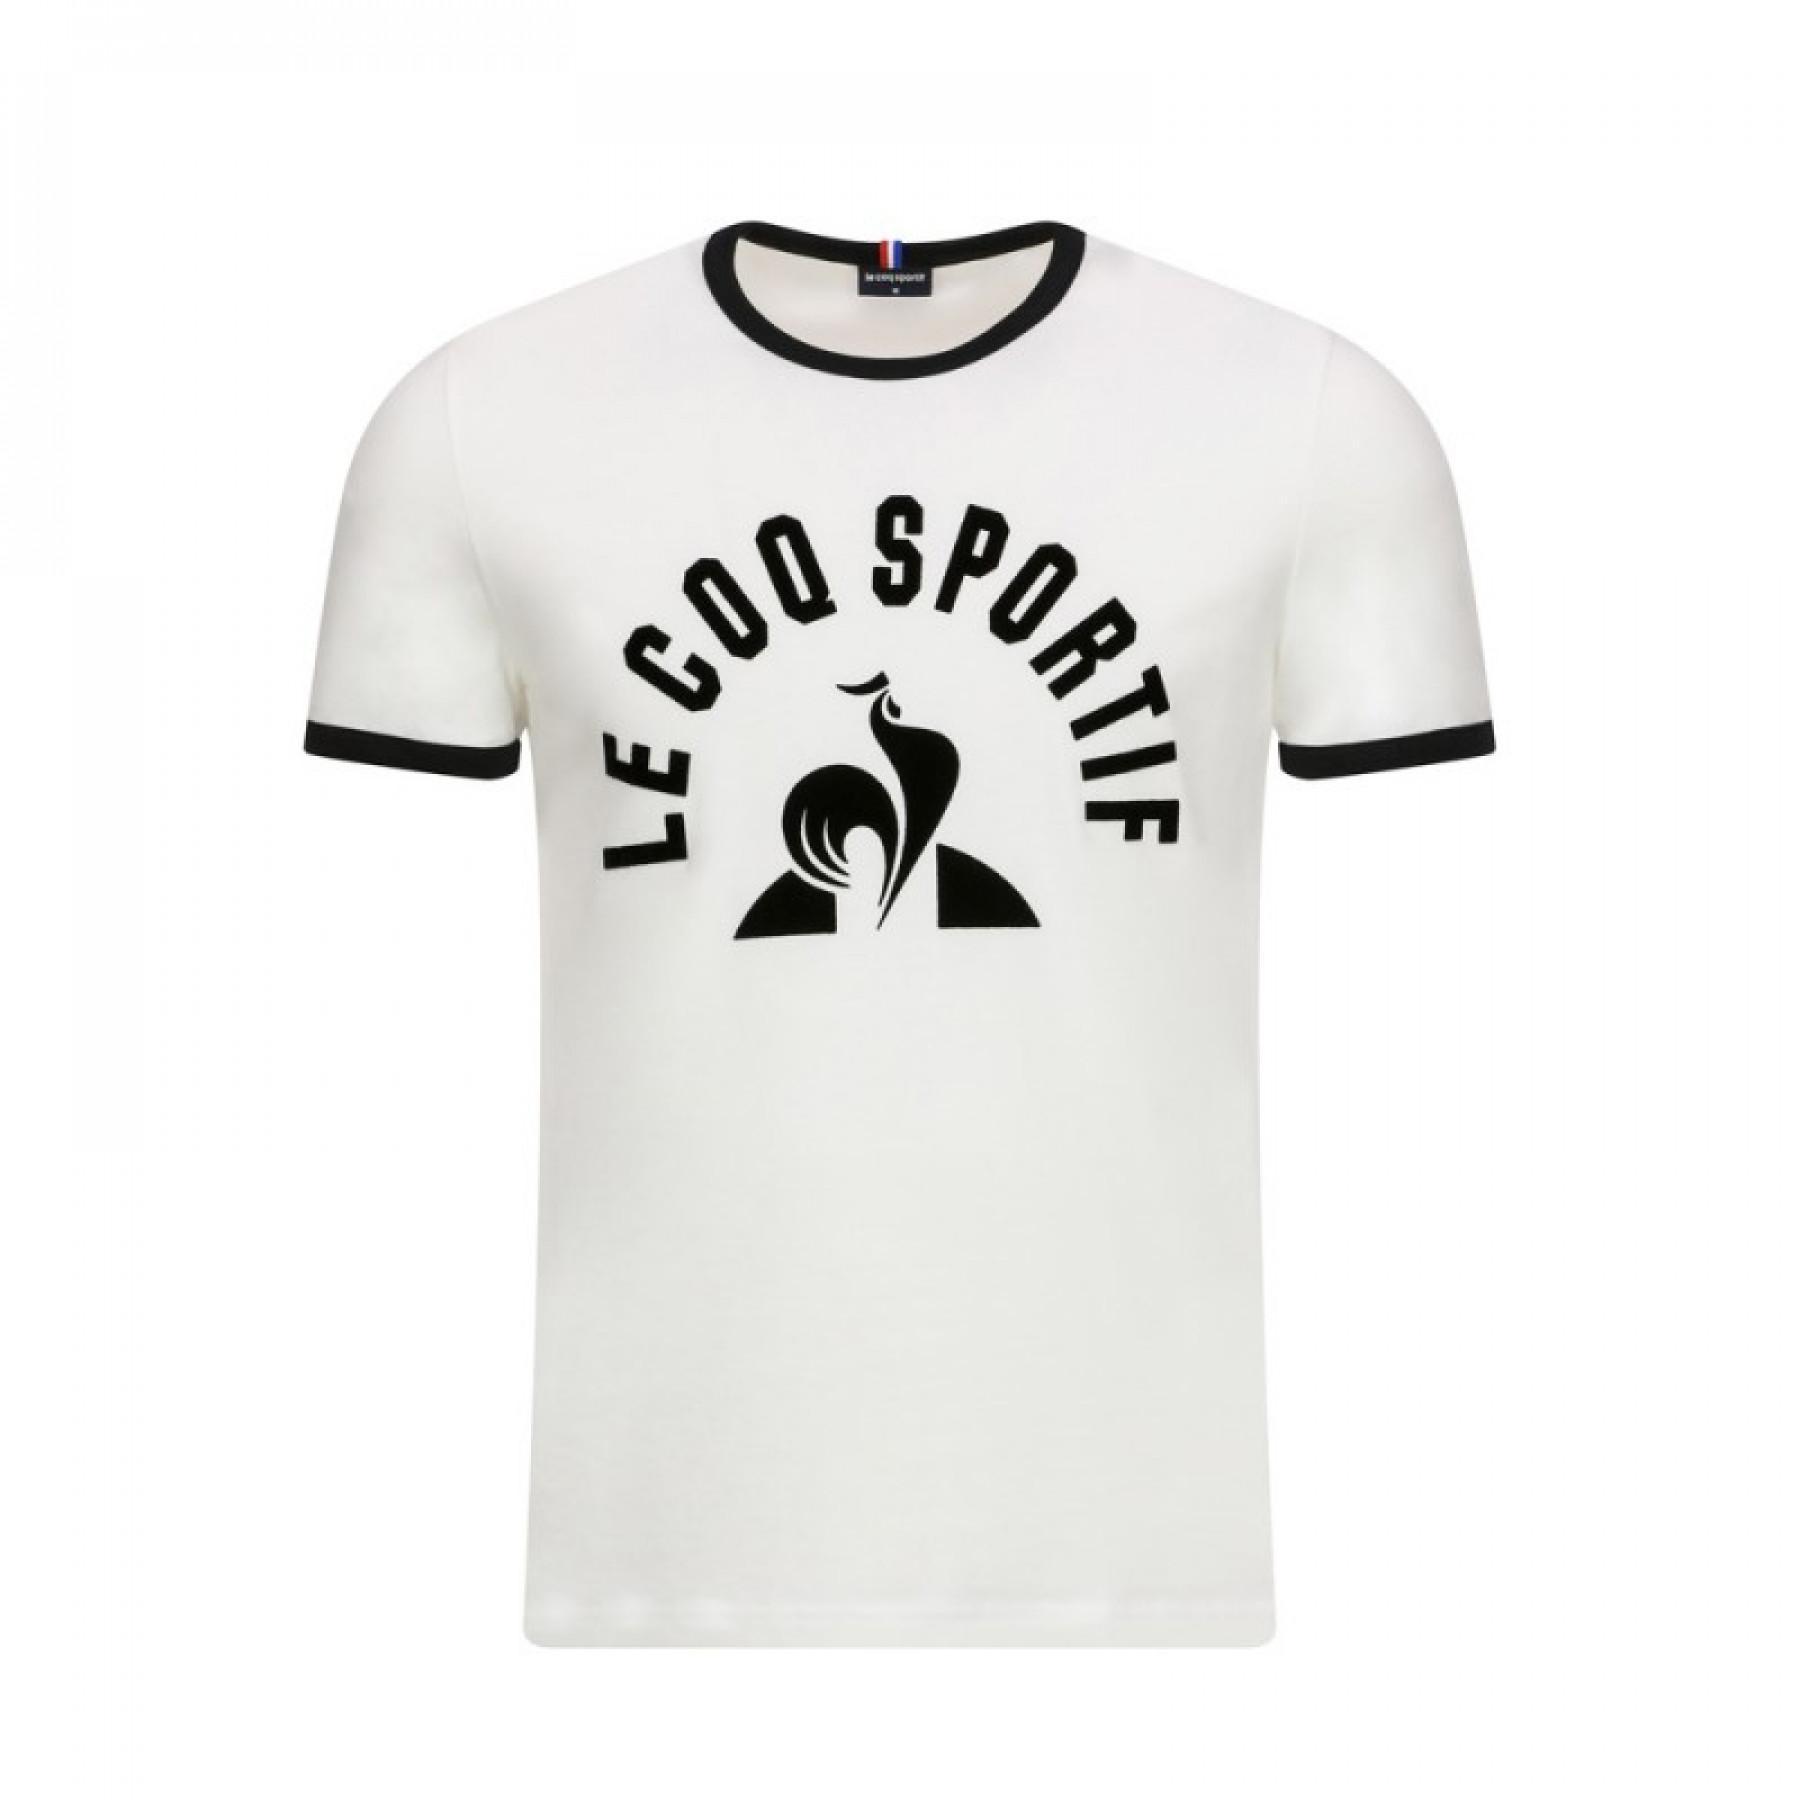 Camiseta Le Coq Sportif Pronto